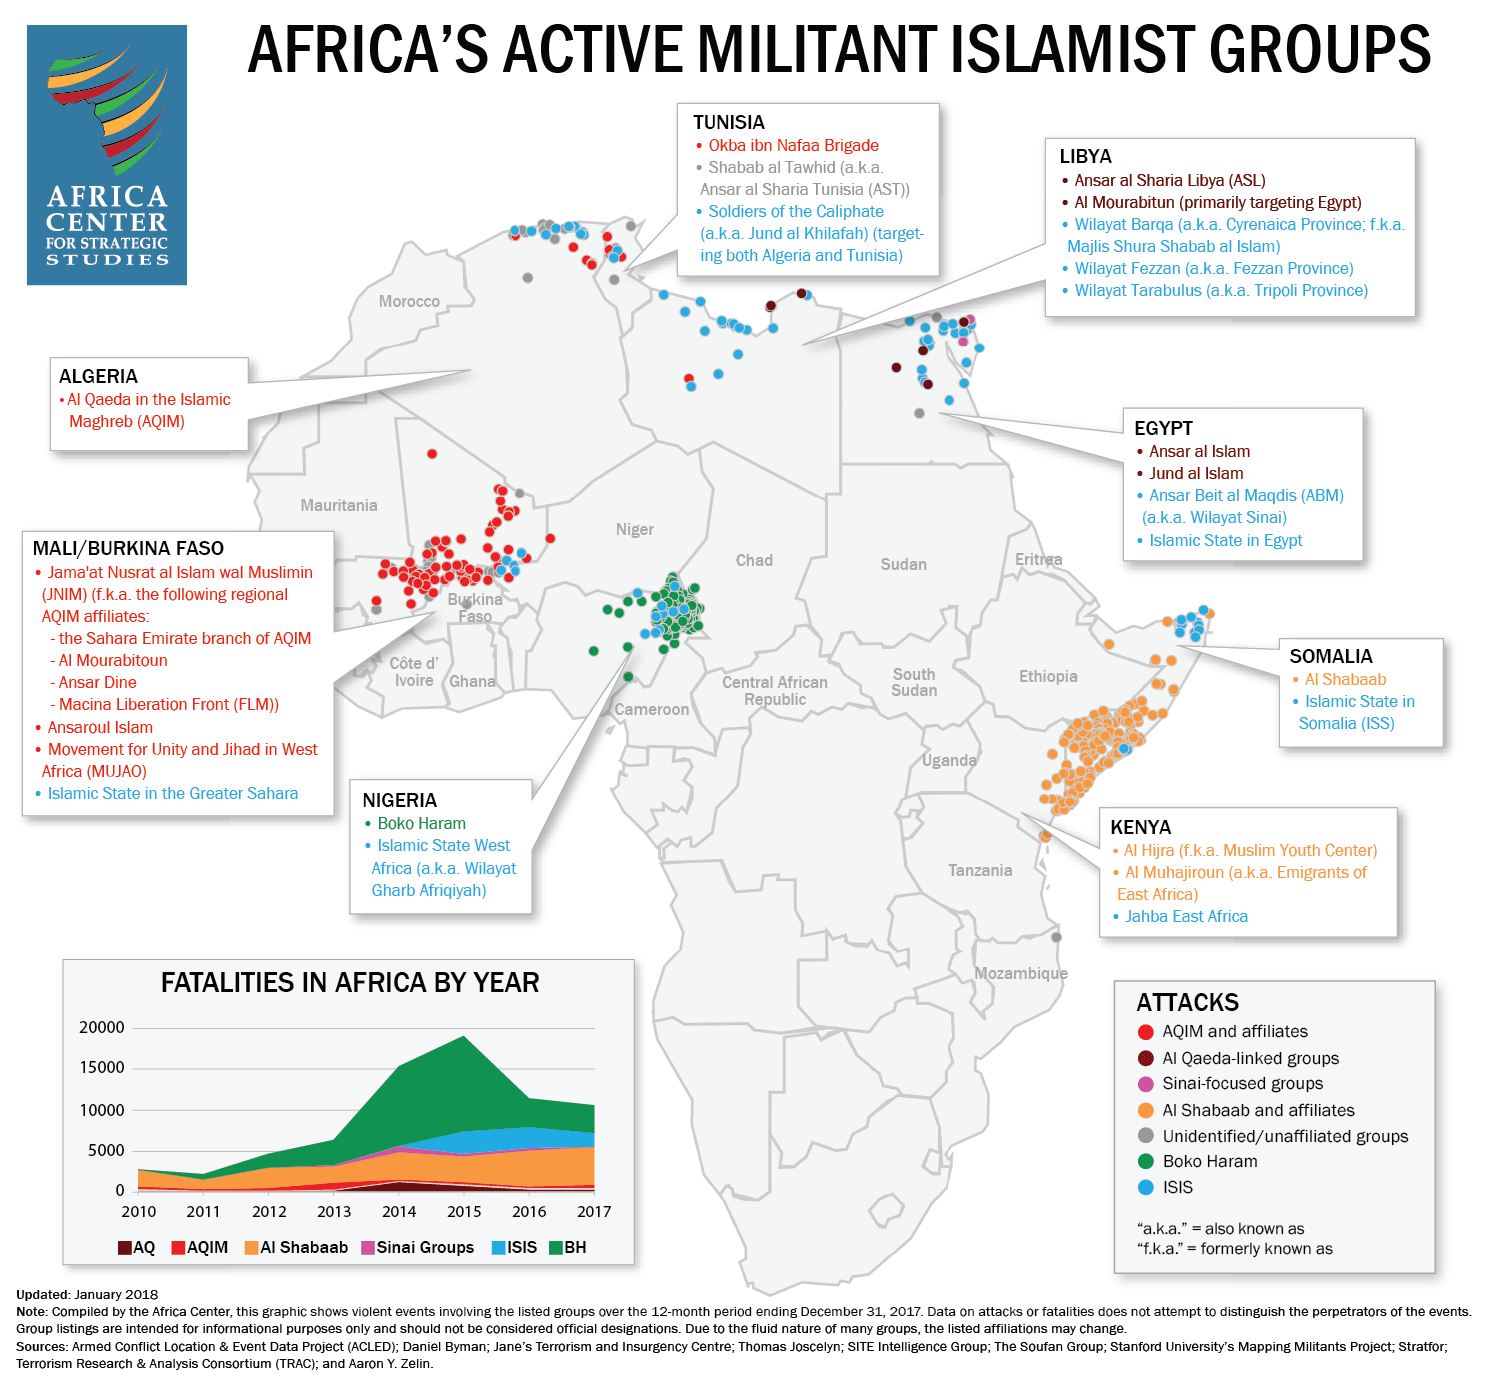 https://africacenter.org/wp-content/uploads/2018/01/Africas-Active-Militant-Islamist-Groups-Jan-2017.png